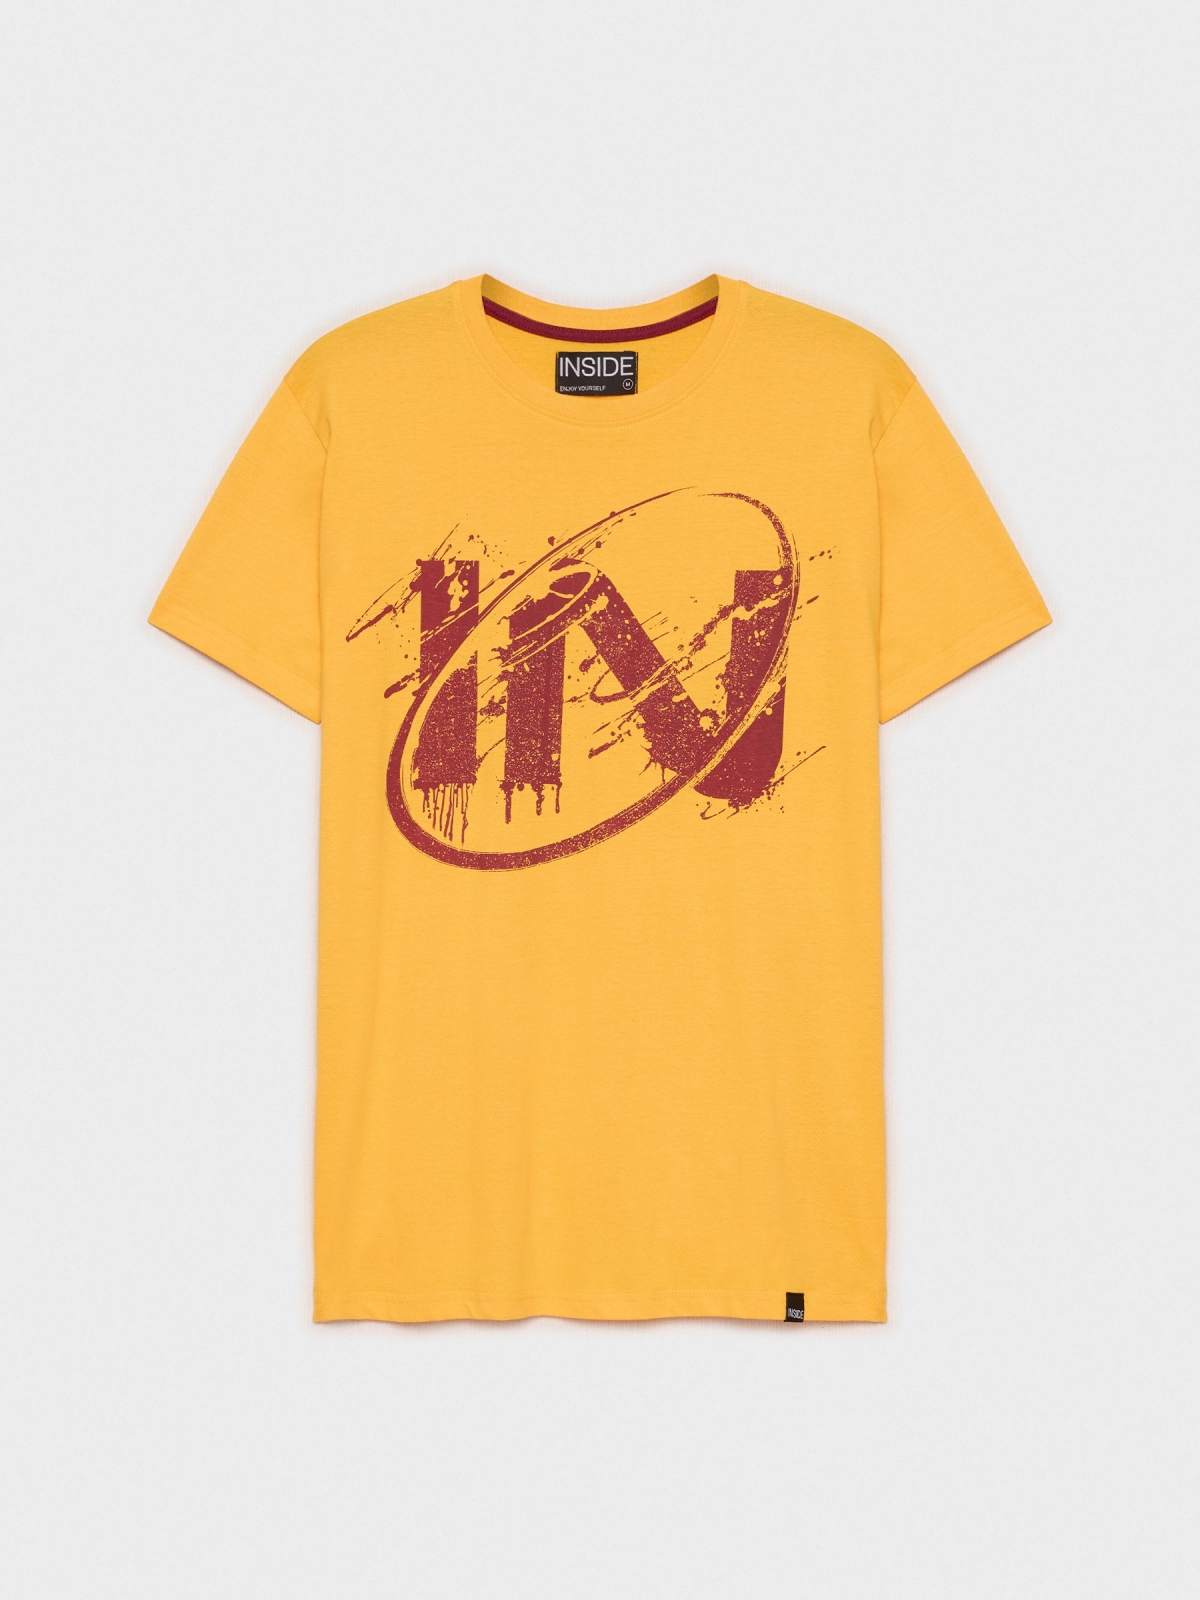  T-shirt impressa no interior amarelo pastel